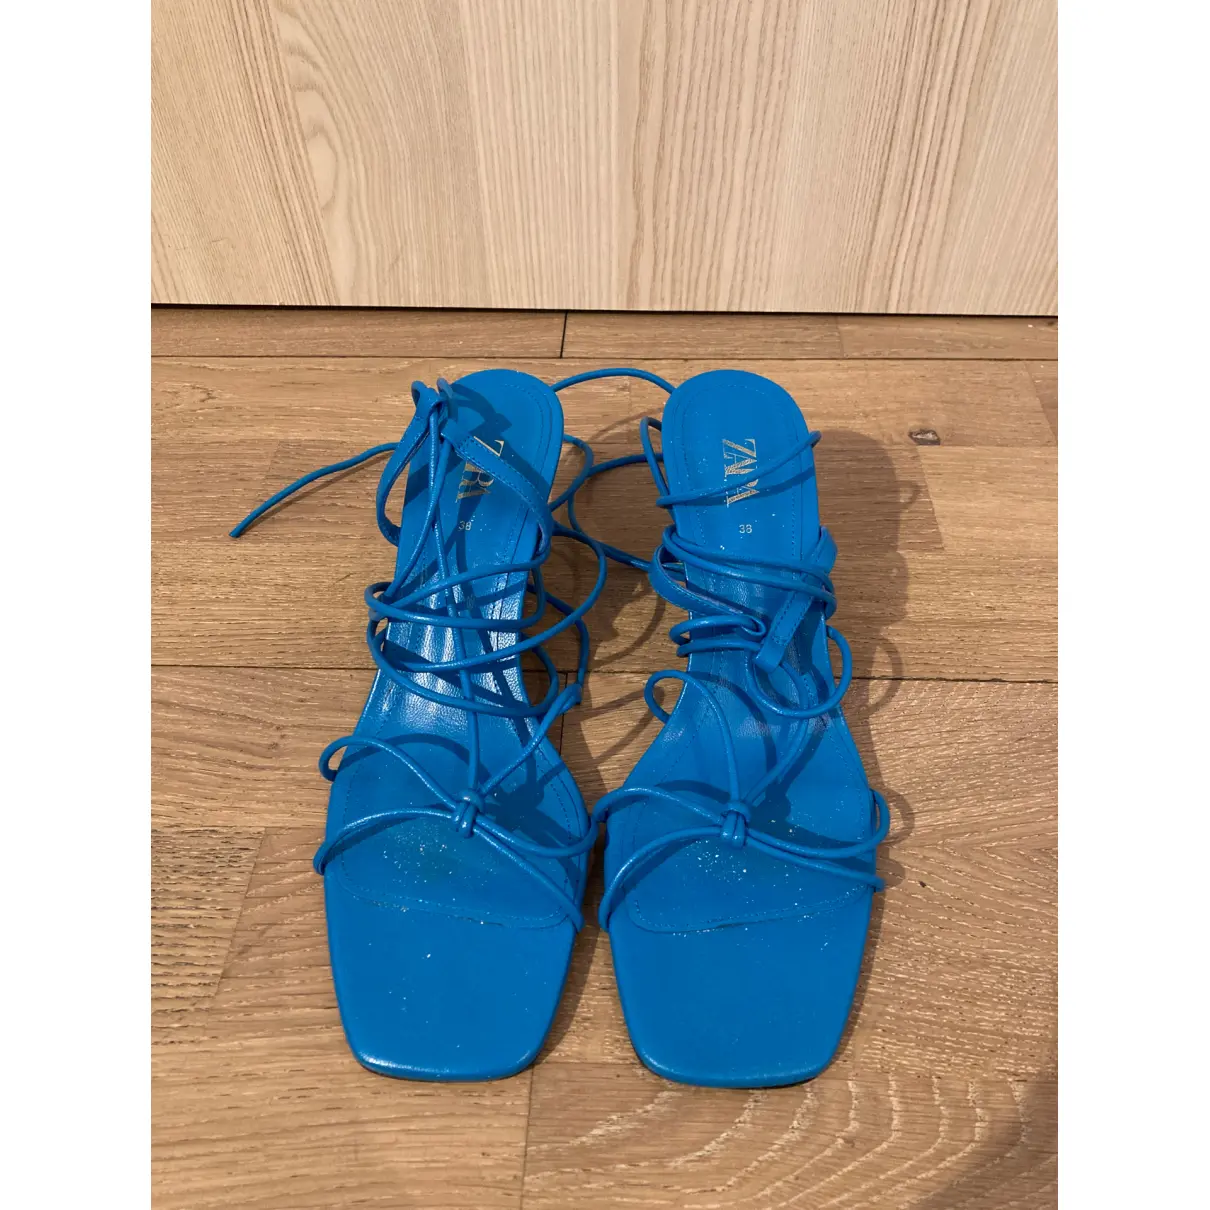 Buy Zara Leather sandals online